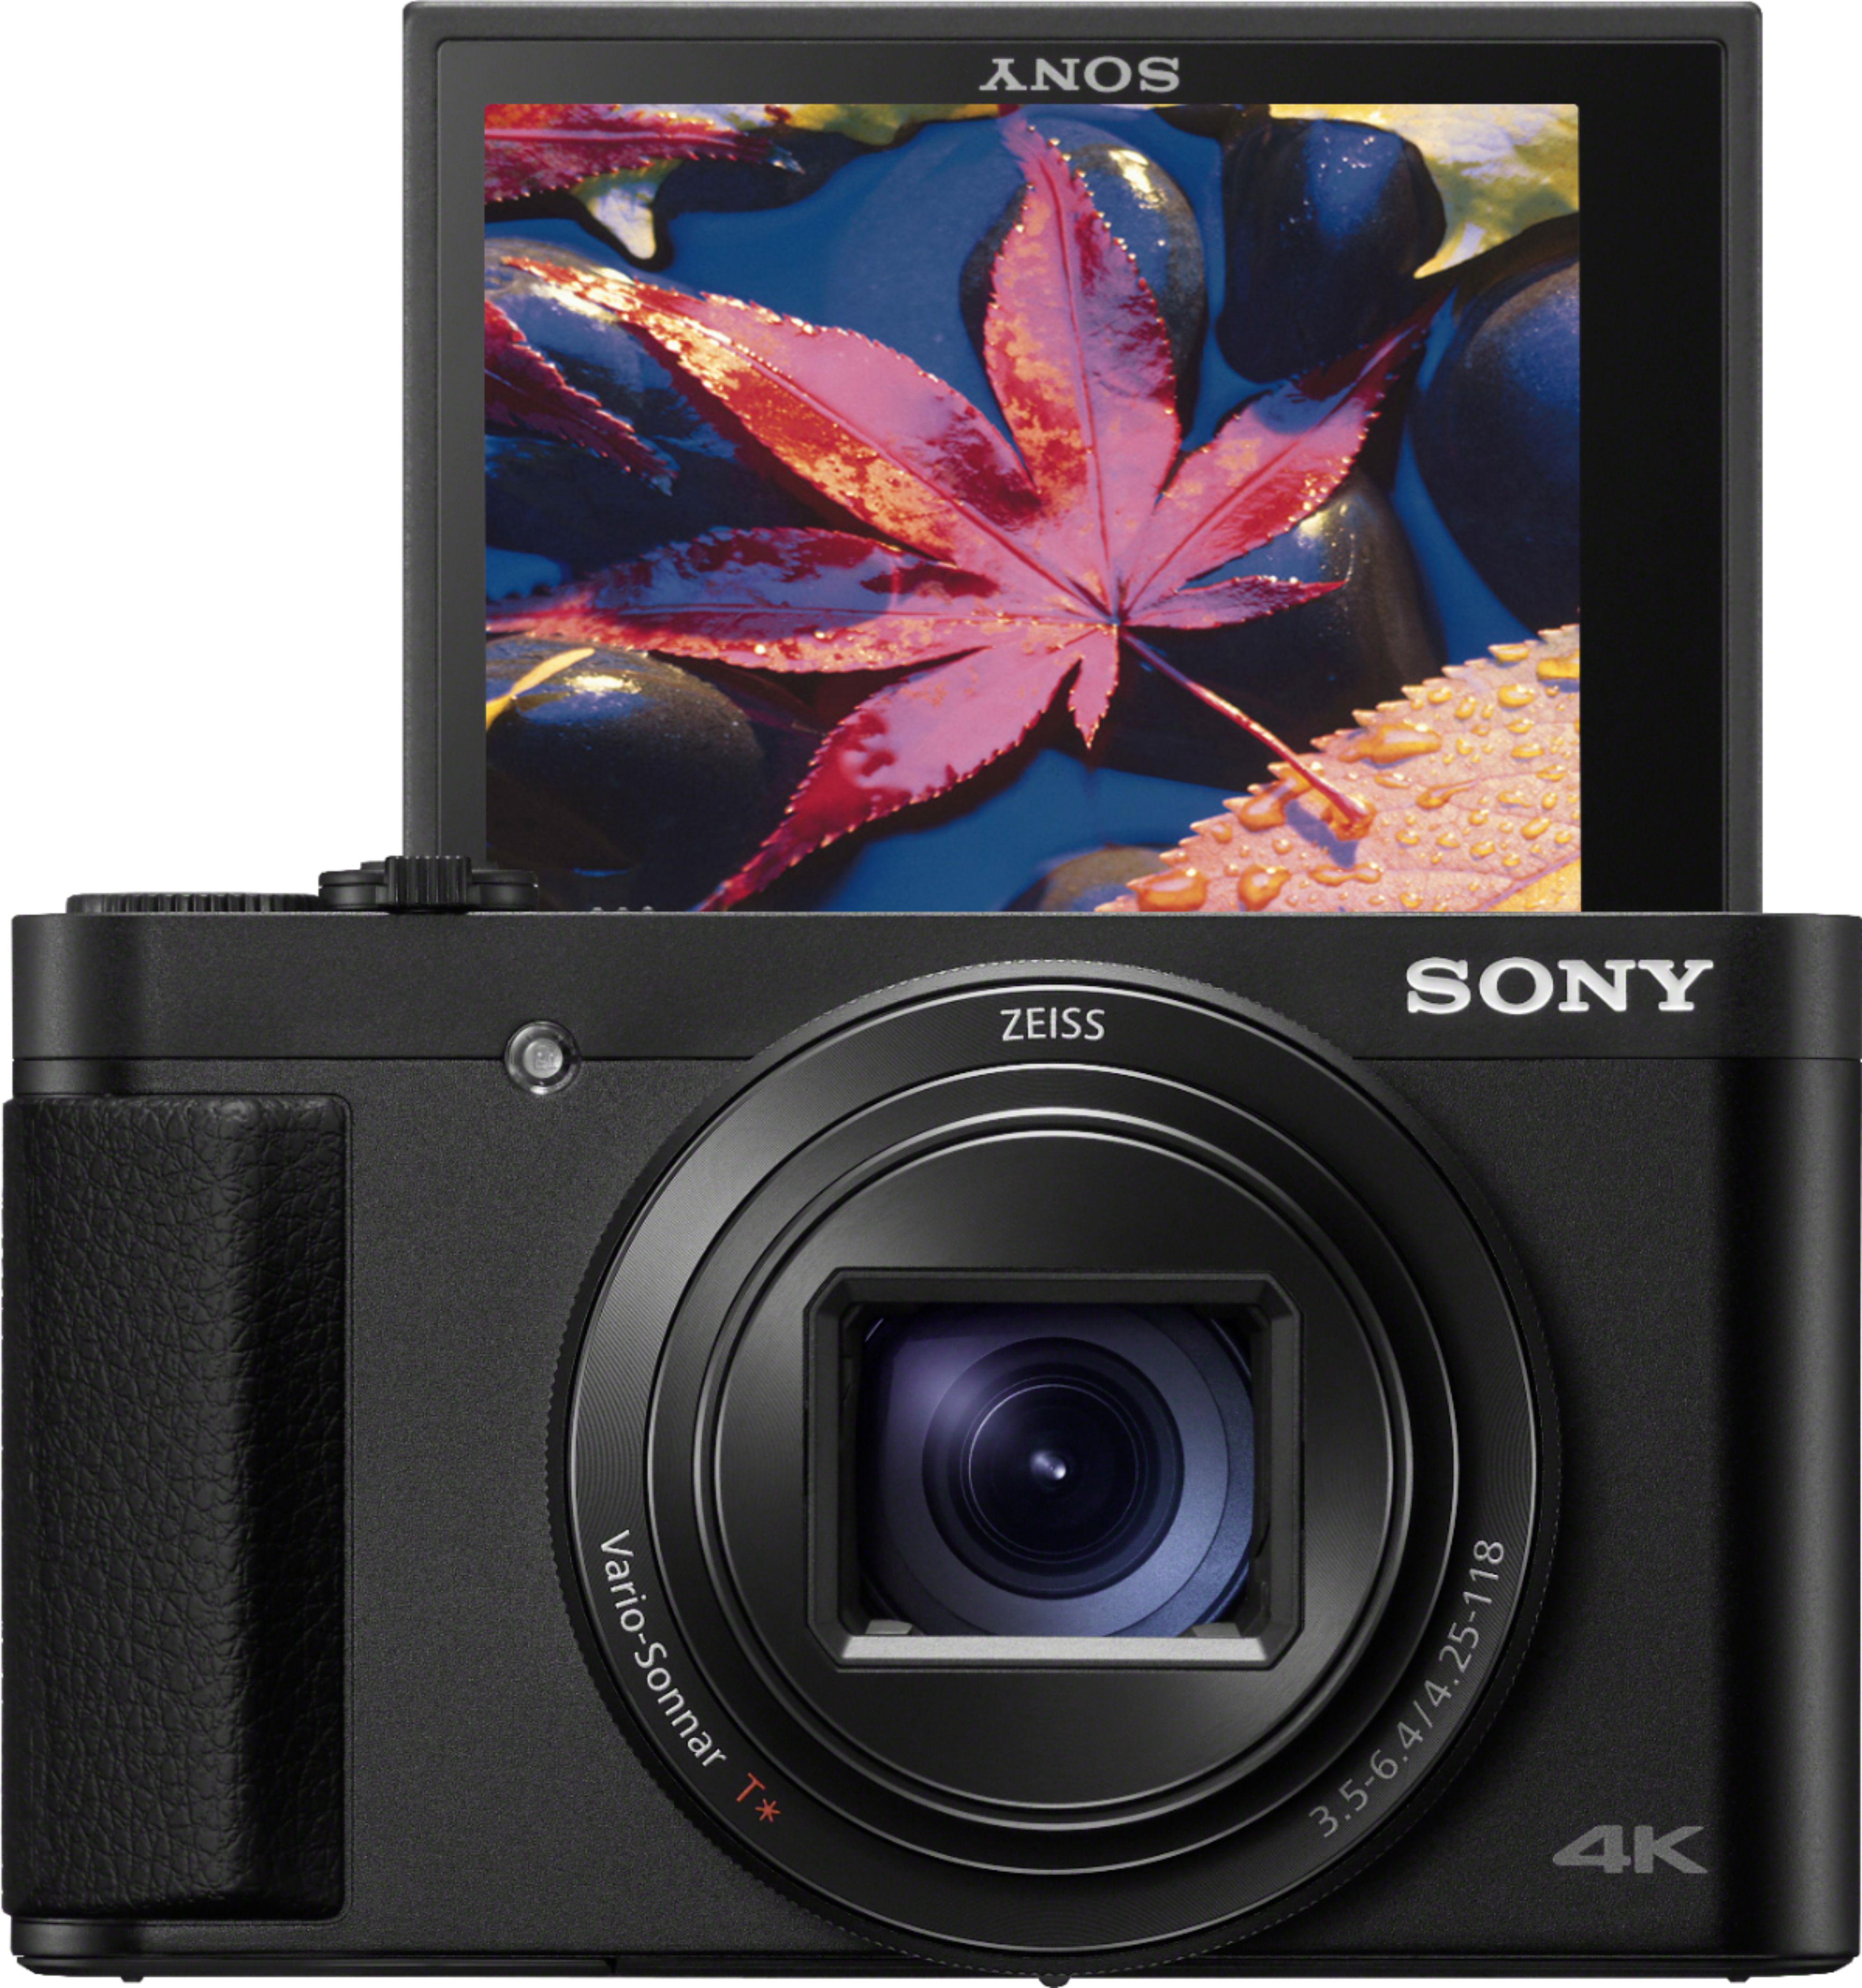 Sony Cyber-shot HX99 18.2-Megapixel Digital Camera Black DSCHX99